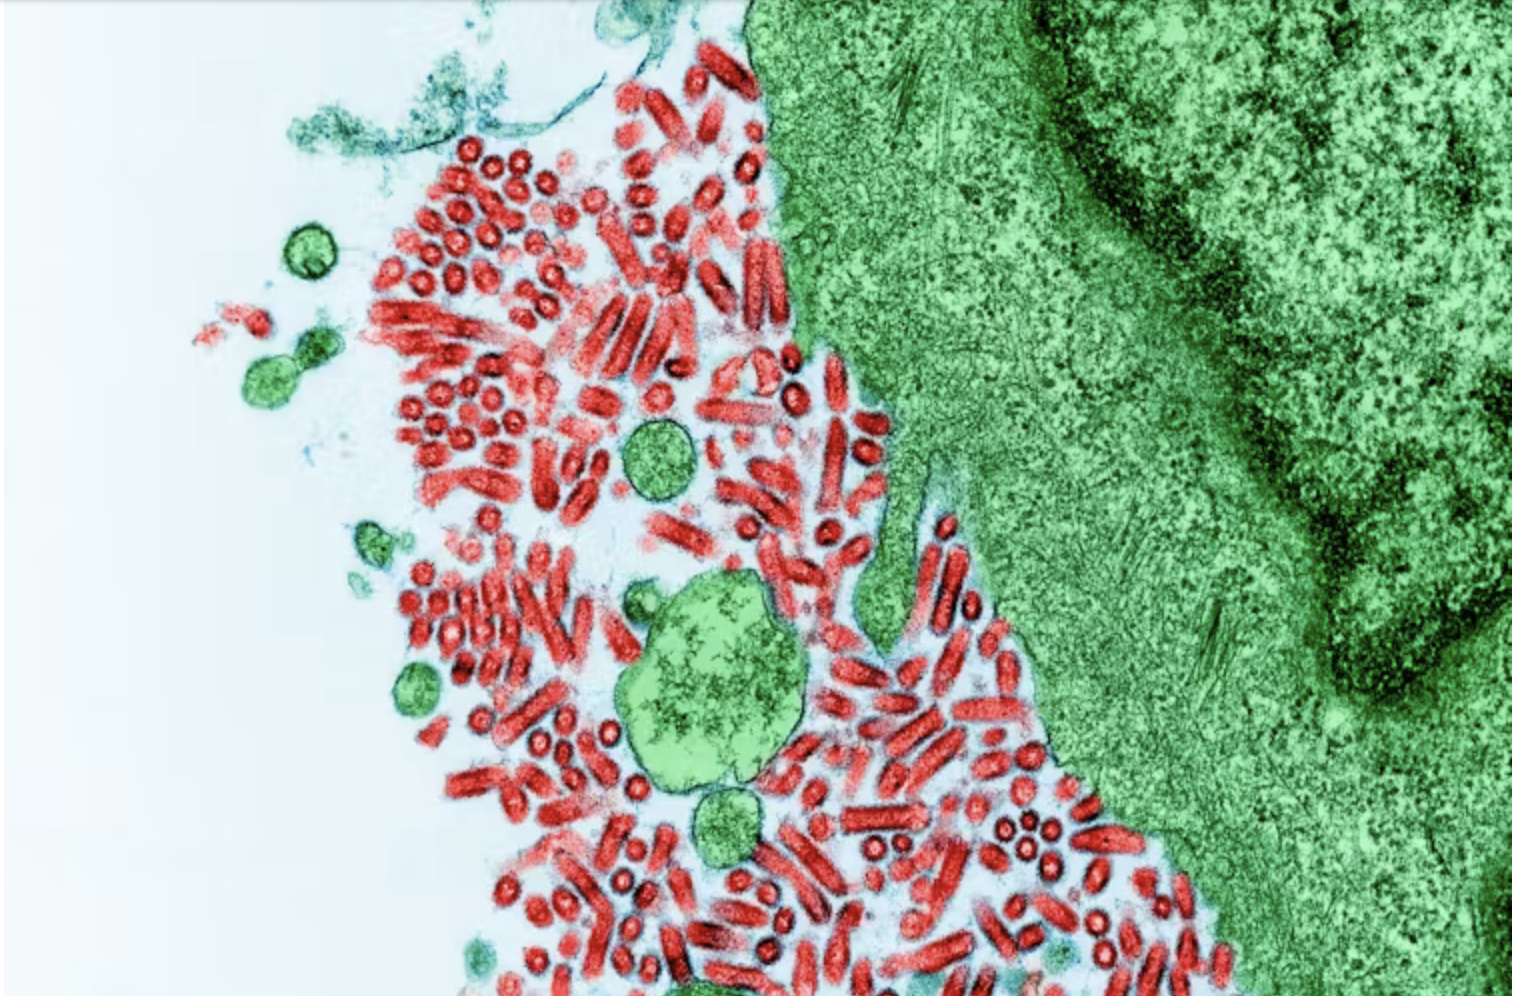 microscopic view of rabies virus